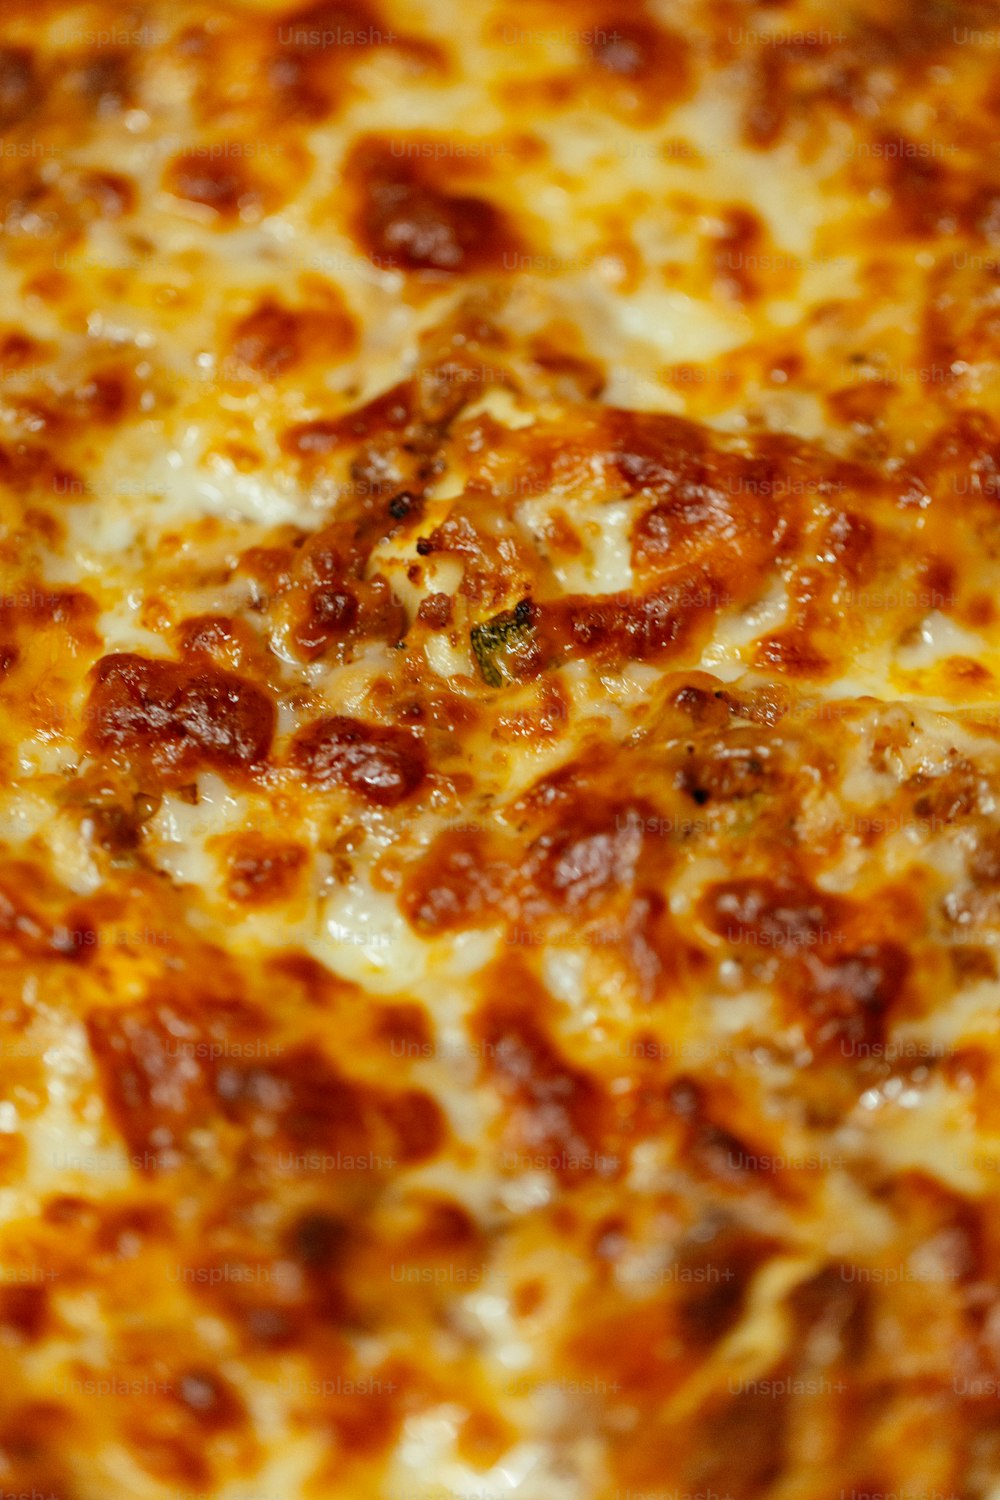 Un primer plano de una pizza con queso y pepperoni